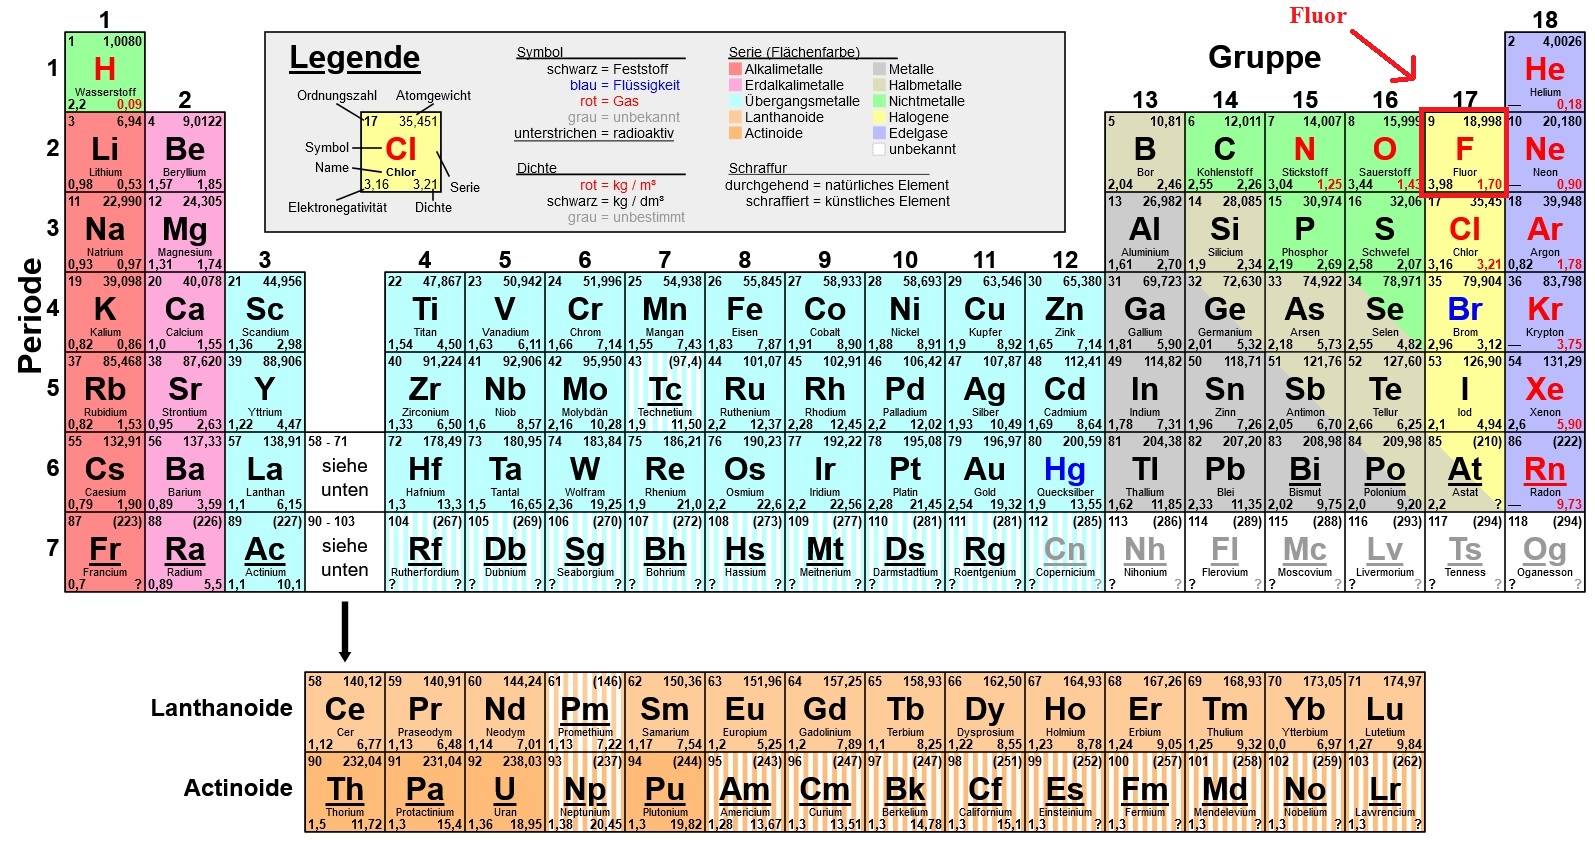 Das Periodensystem der Elemente. (Bildquelle: Wikipedia.org / Antonsusi, Public Domain Lizenz)